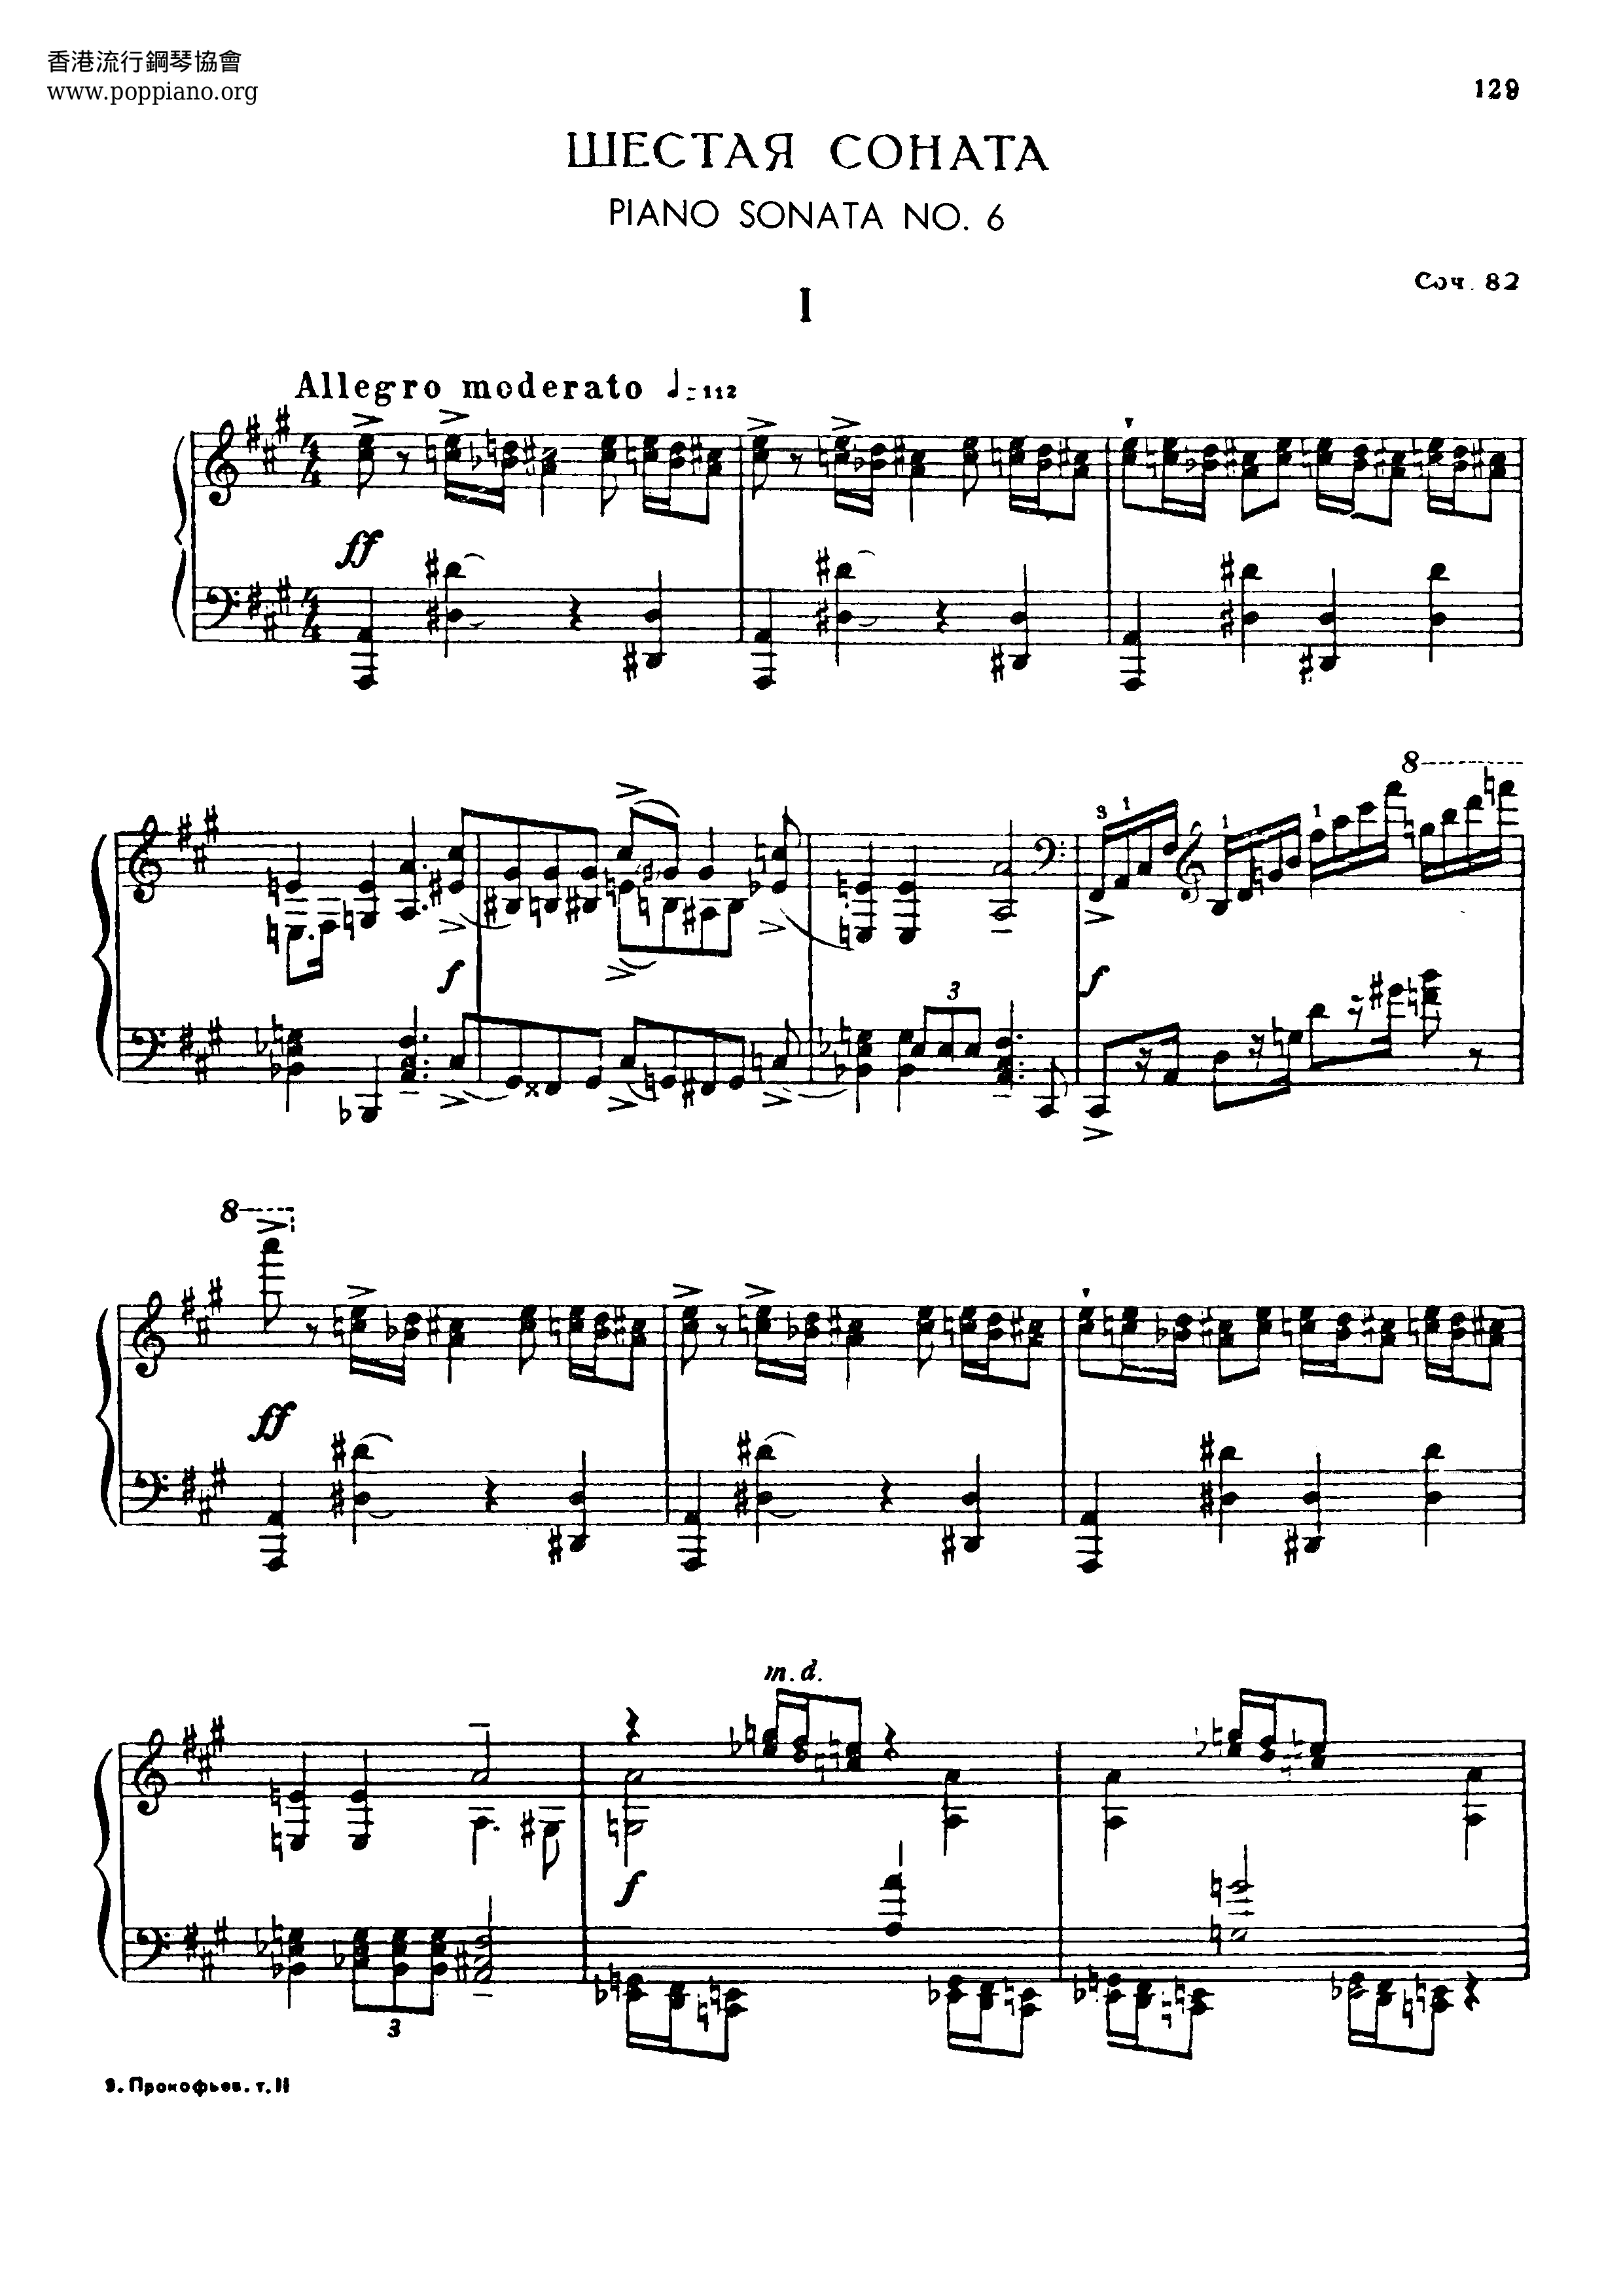 Piano Sonata No.6, Op.82 Score